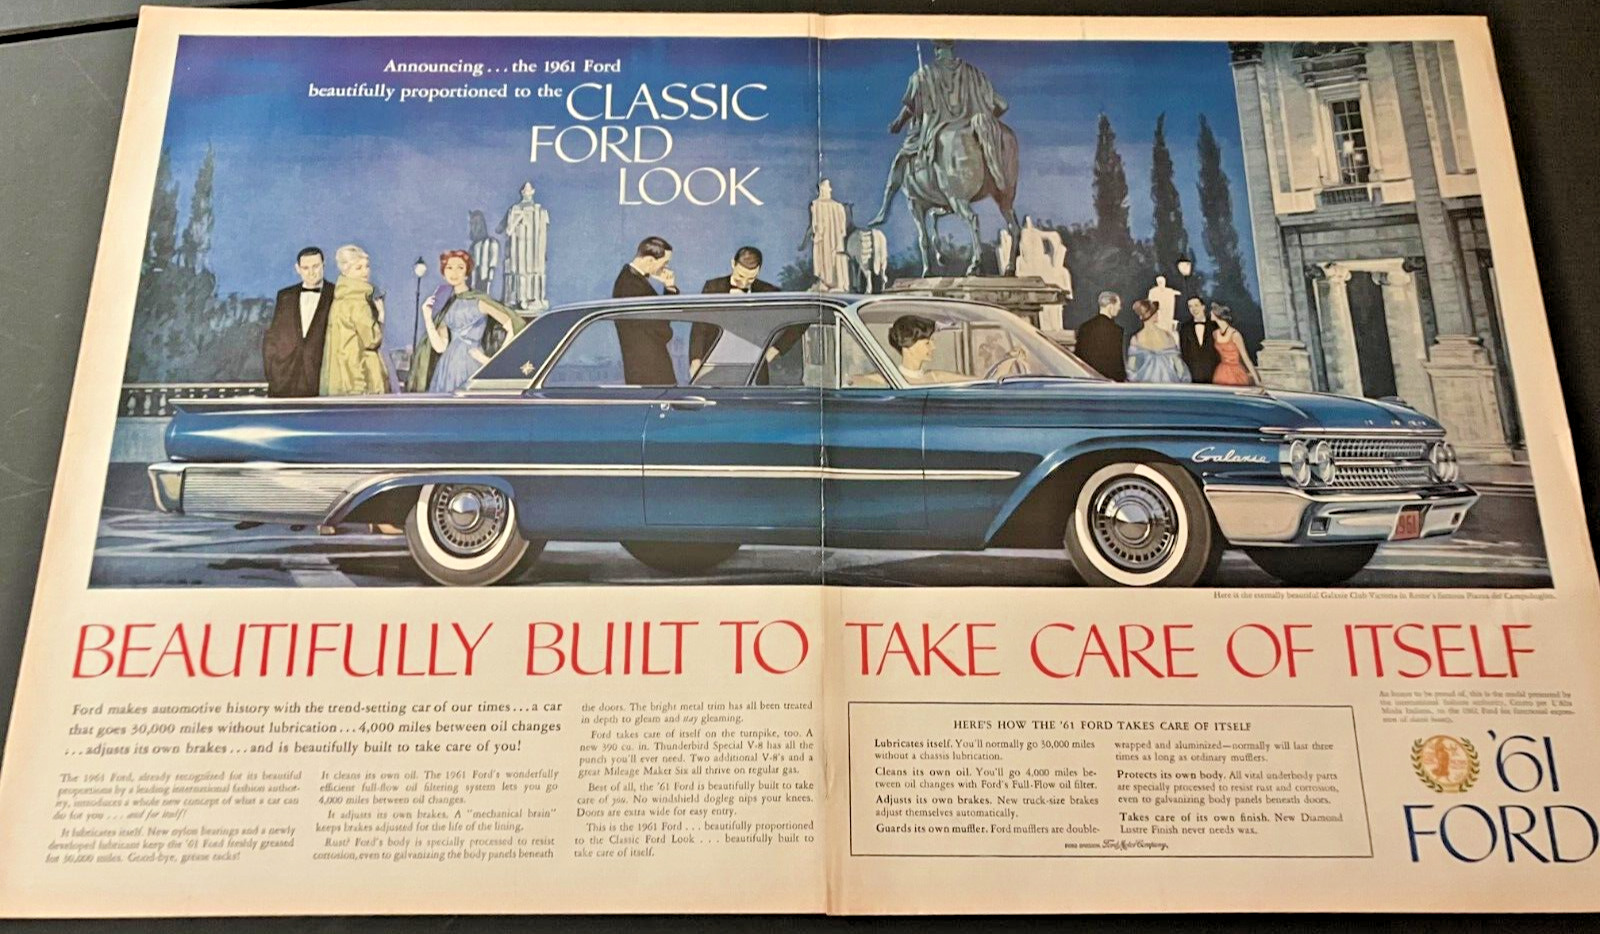 Blue 1961 Ford Galaxie Club Victoria in Piazza del Campidoglio Vintage Print Ad